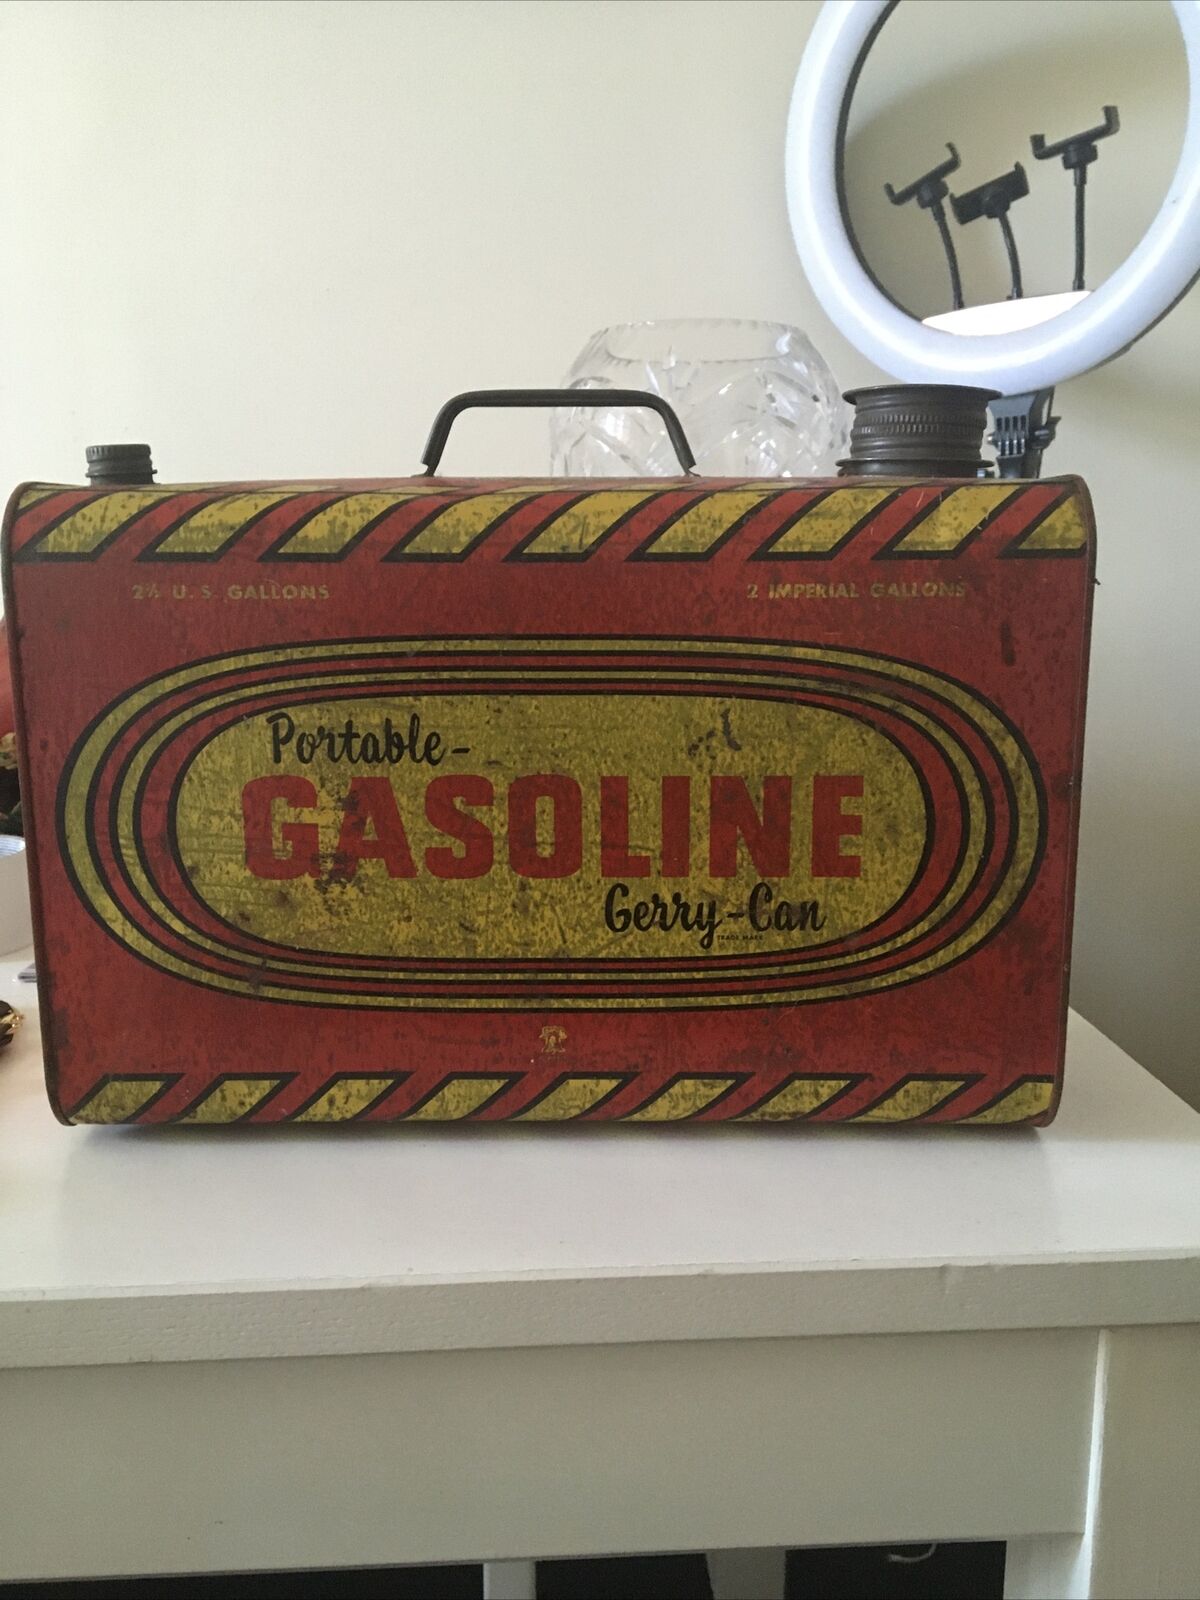 Vintage Rare Portable Gasoline 2 1/2 Gallon Gerry Can